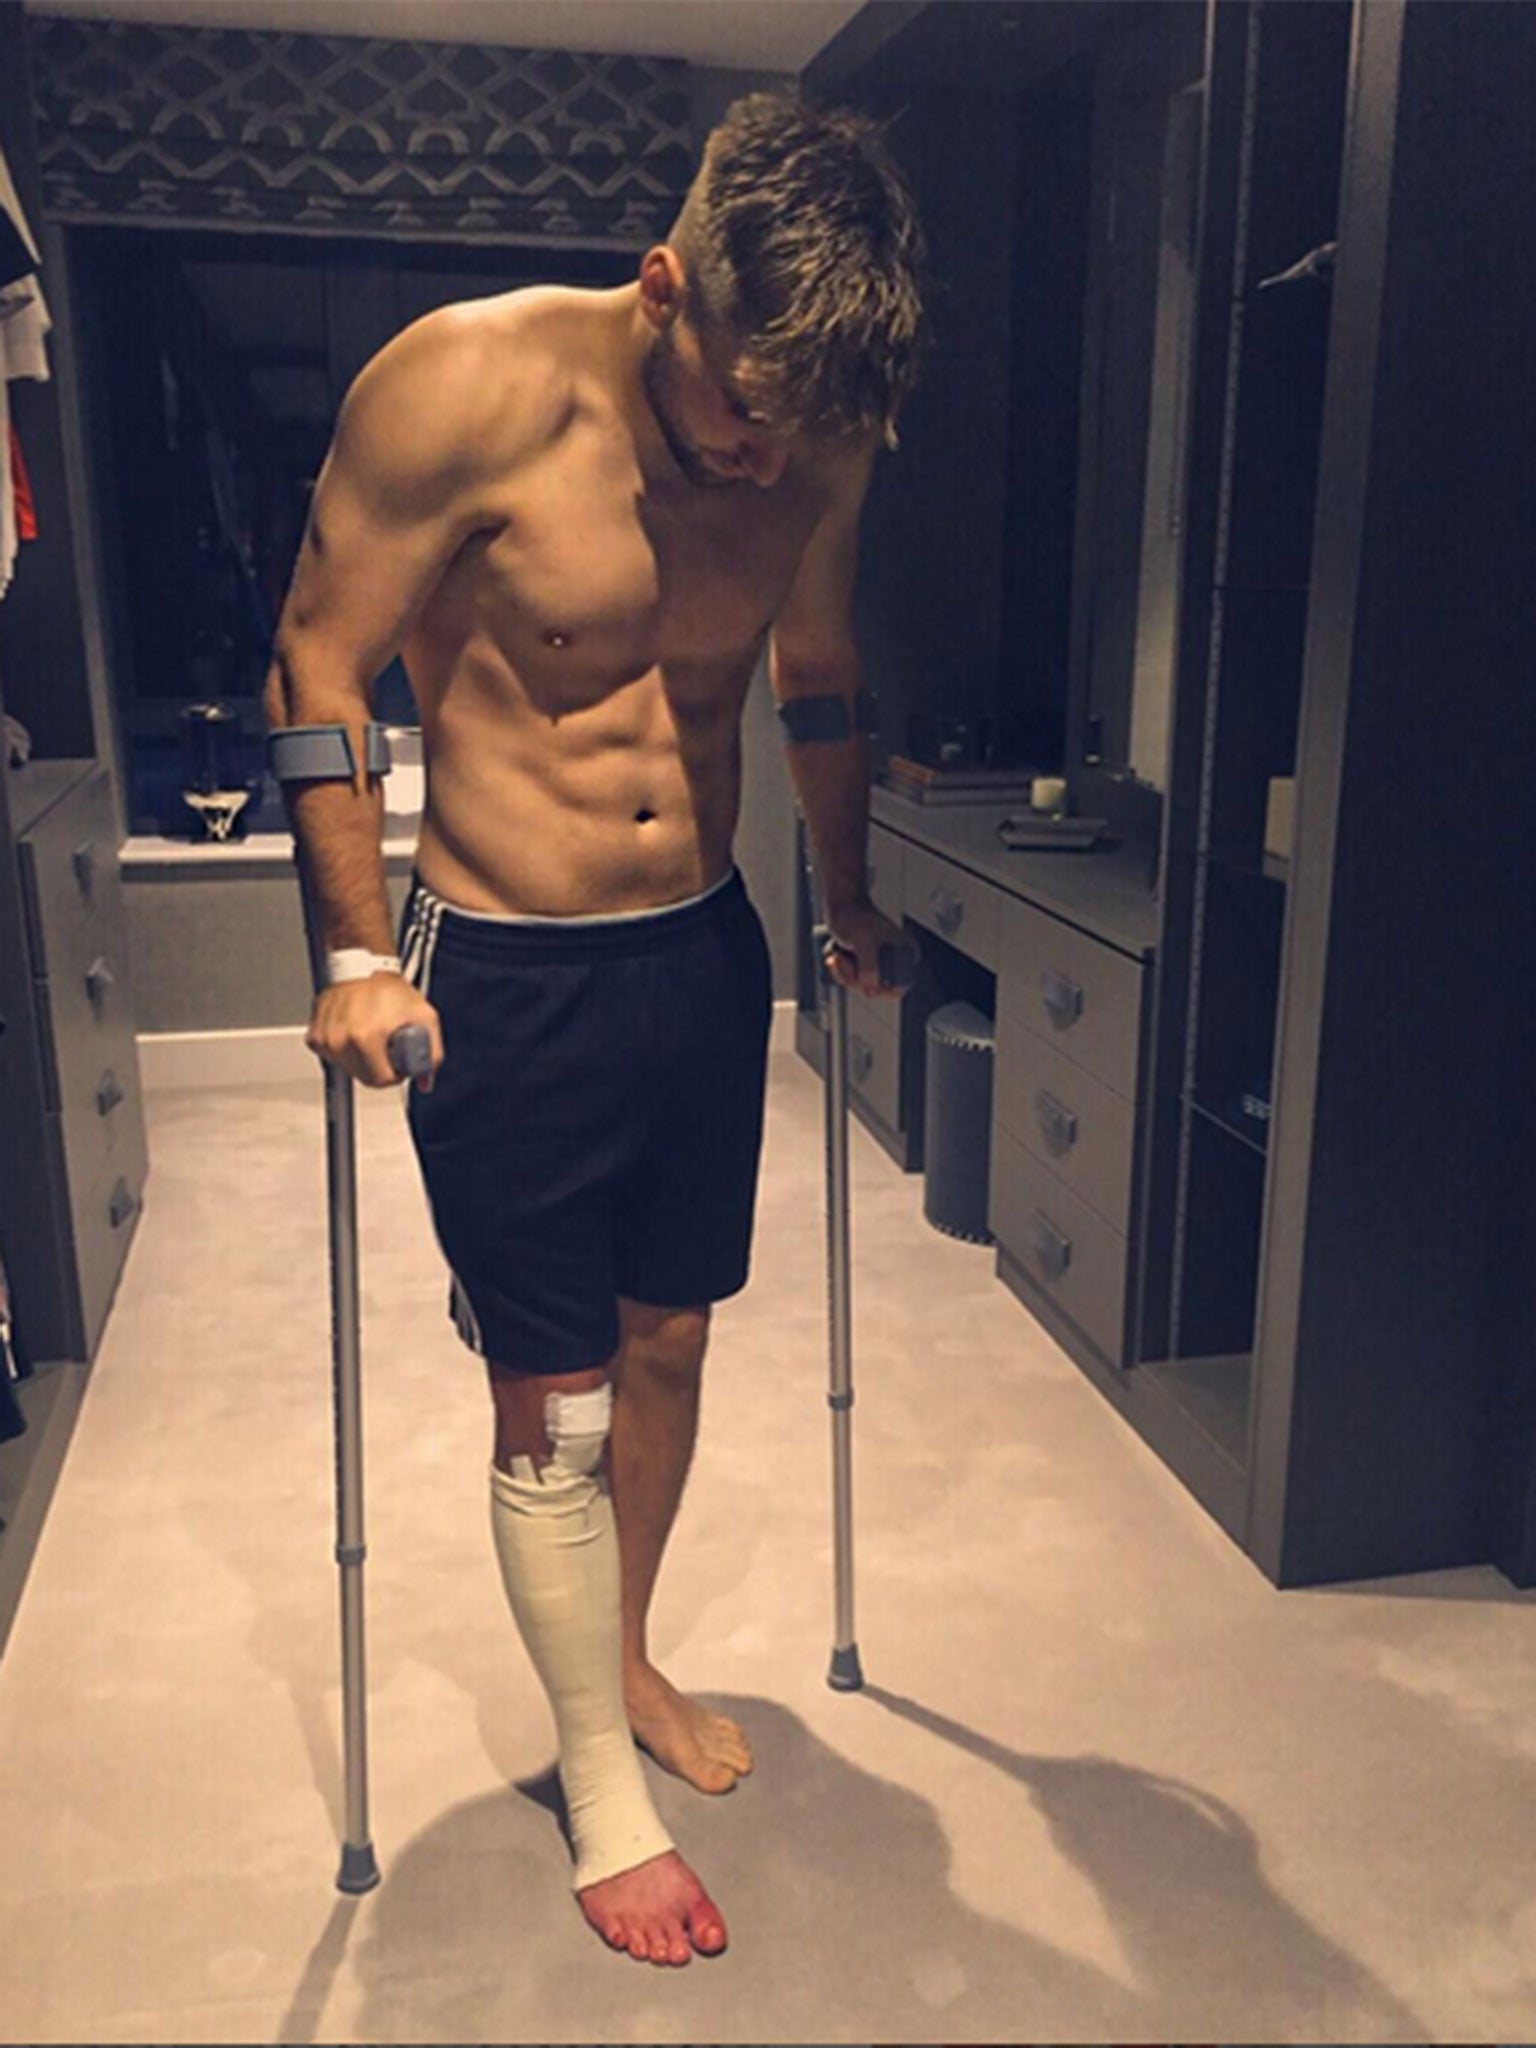 Luke Shaw puts weight on his broken leg